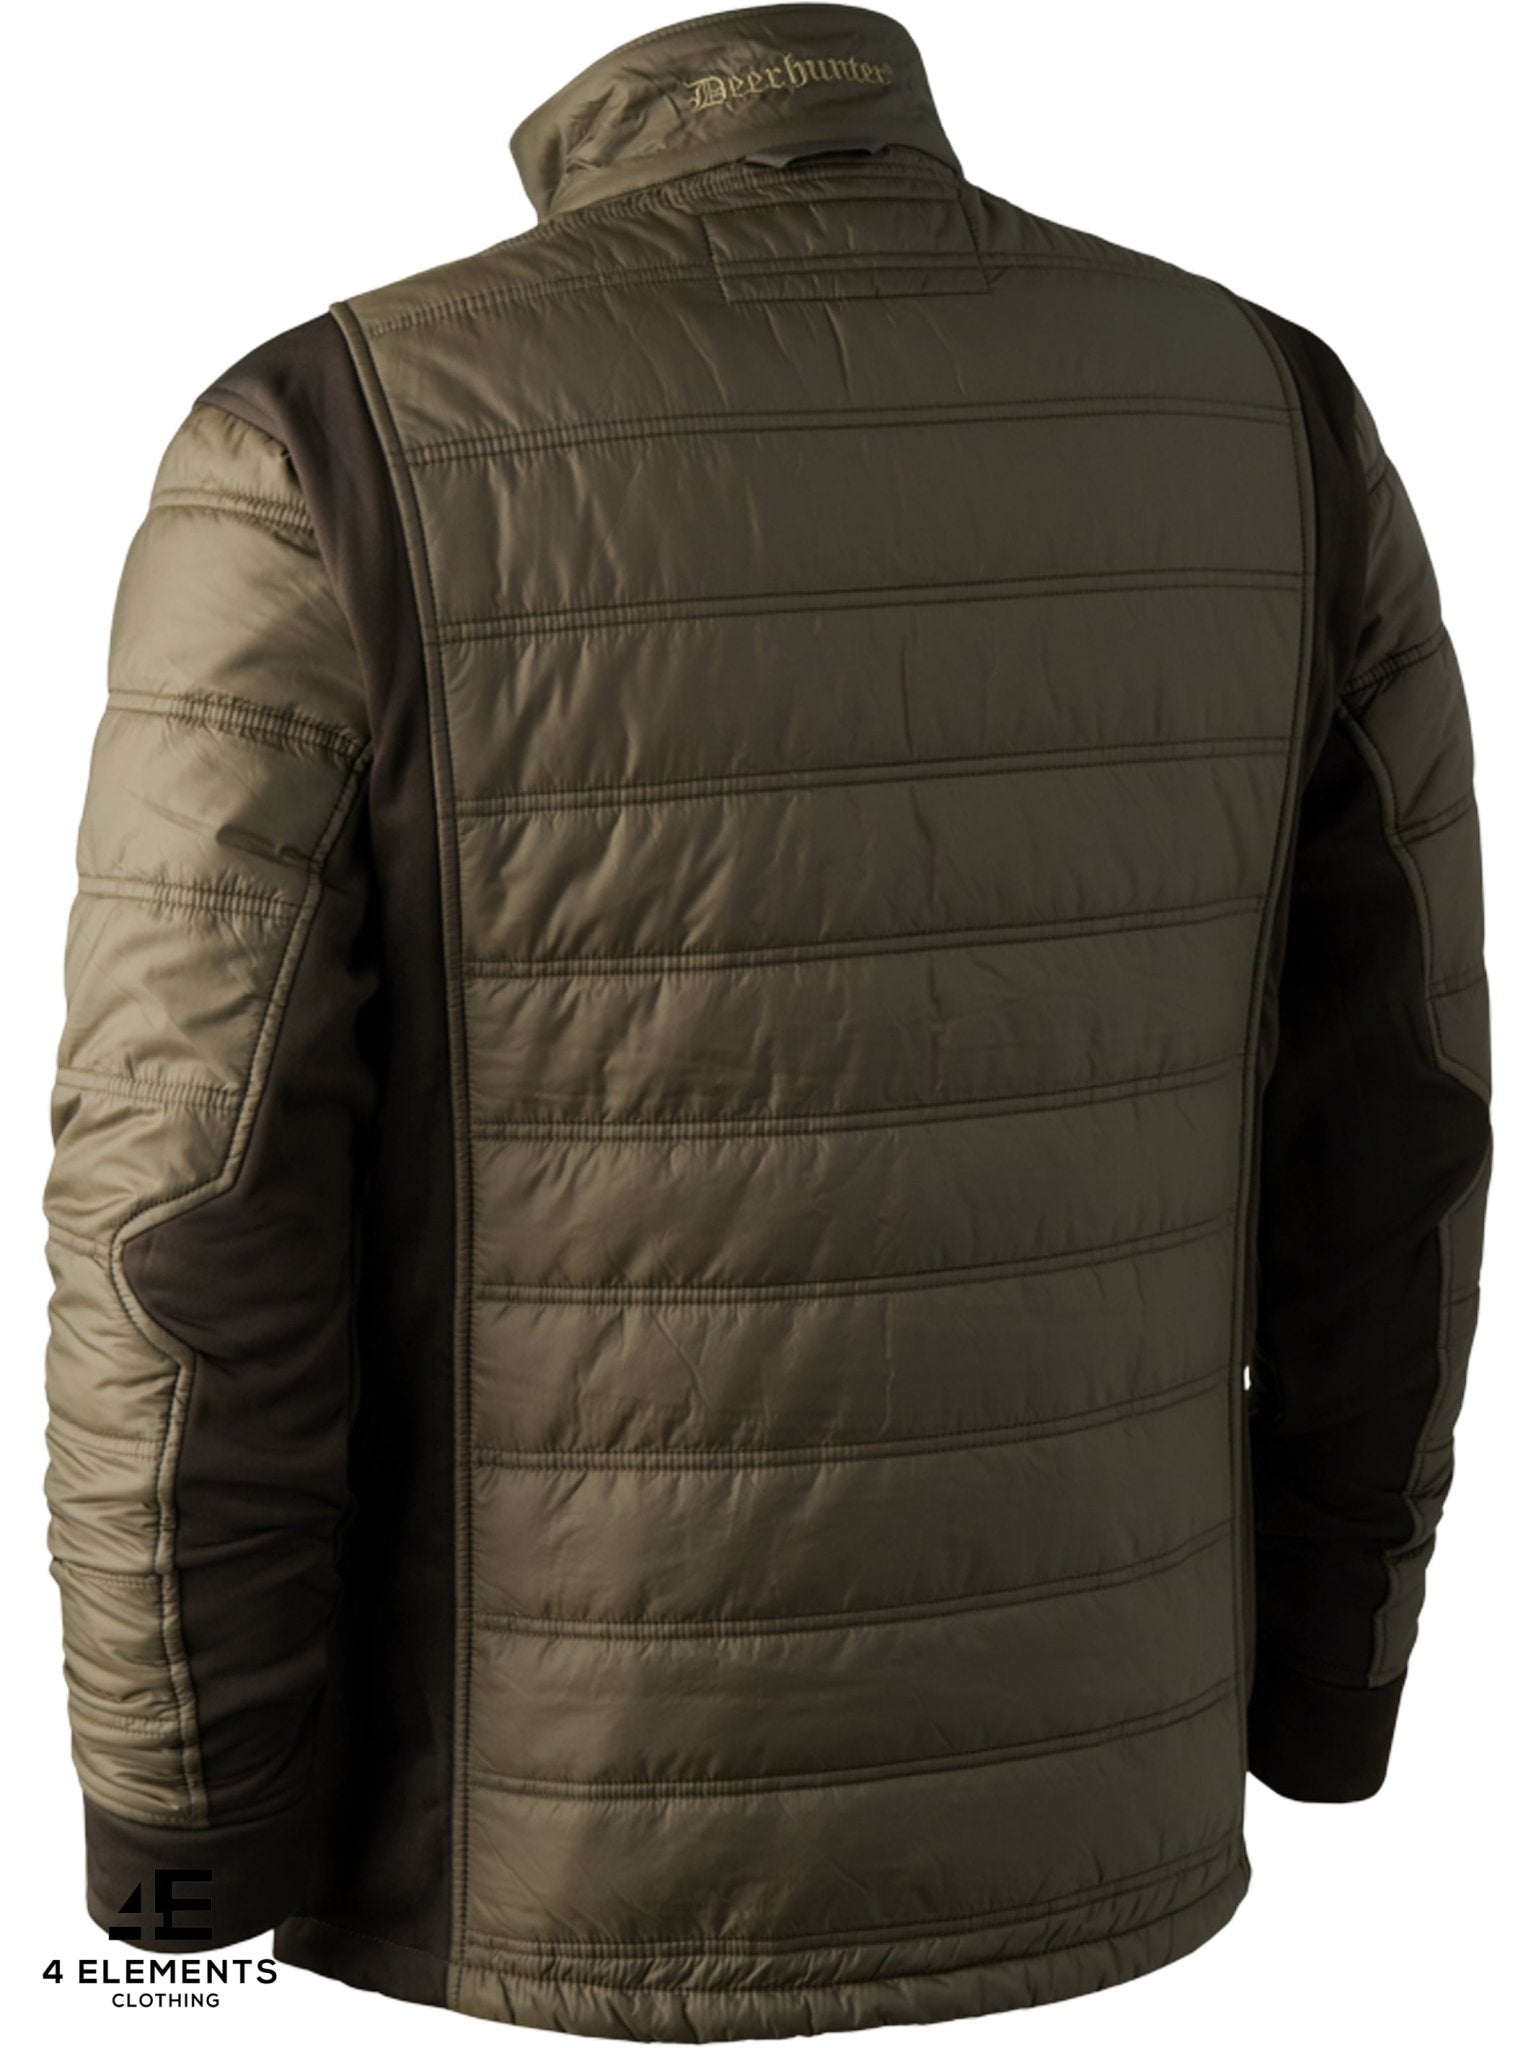 4elementsclothingDeerhunterDeerhunter - Muflon Zip-In Jacket - Ideal for the Deerhunter Muflon owner.Outerwear5720-376-50